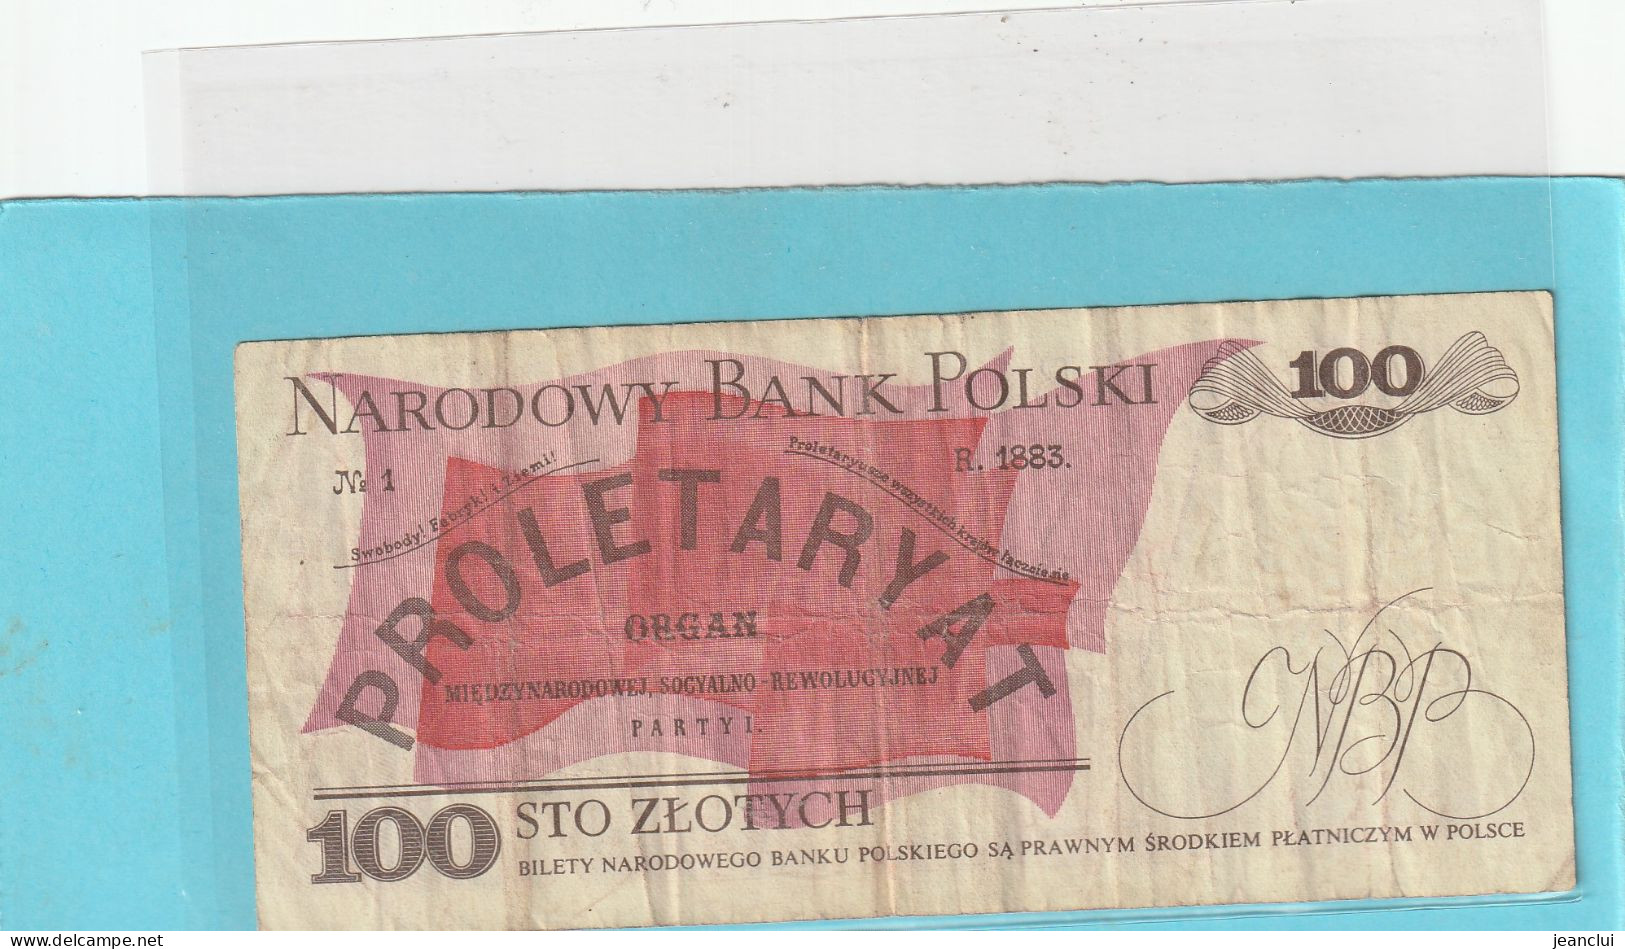 NARODOWY BANK POLSKI . 100 ZLOTYCH .  1-12-1988 .  N° RH 0845705 .  2 SCANNES - Pologne